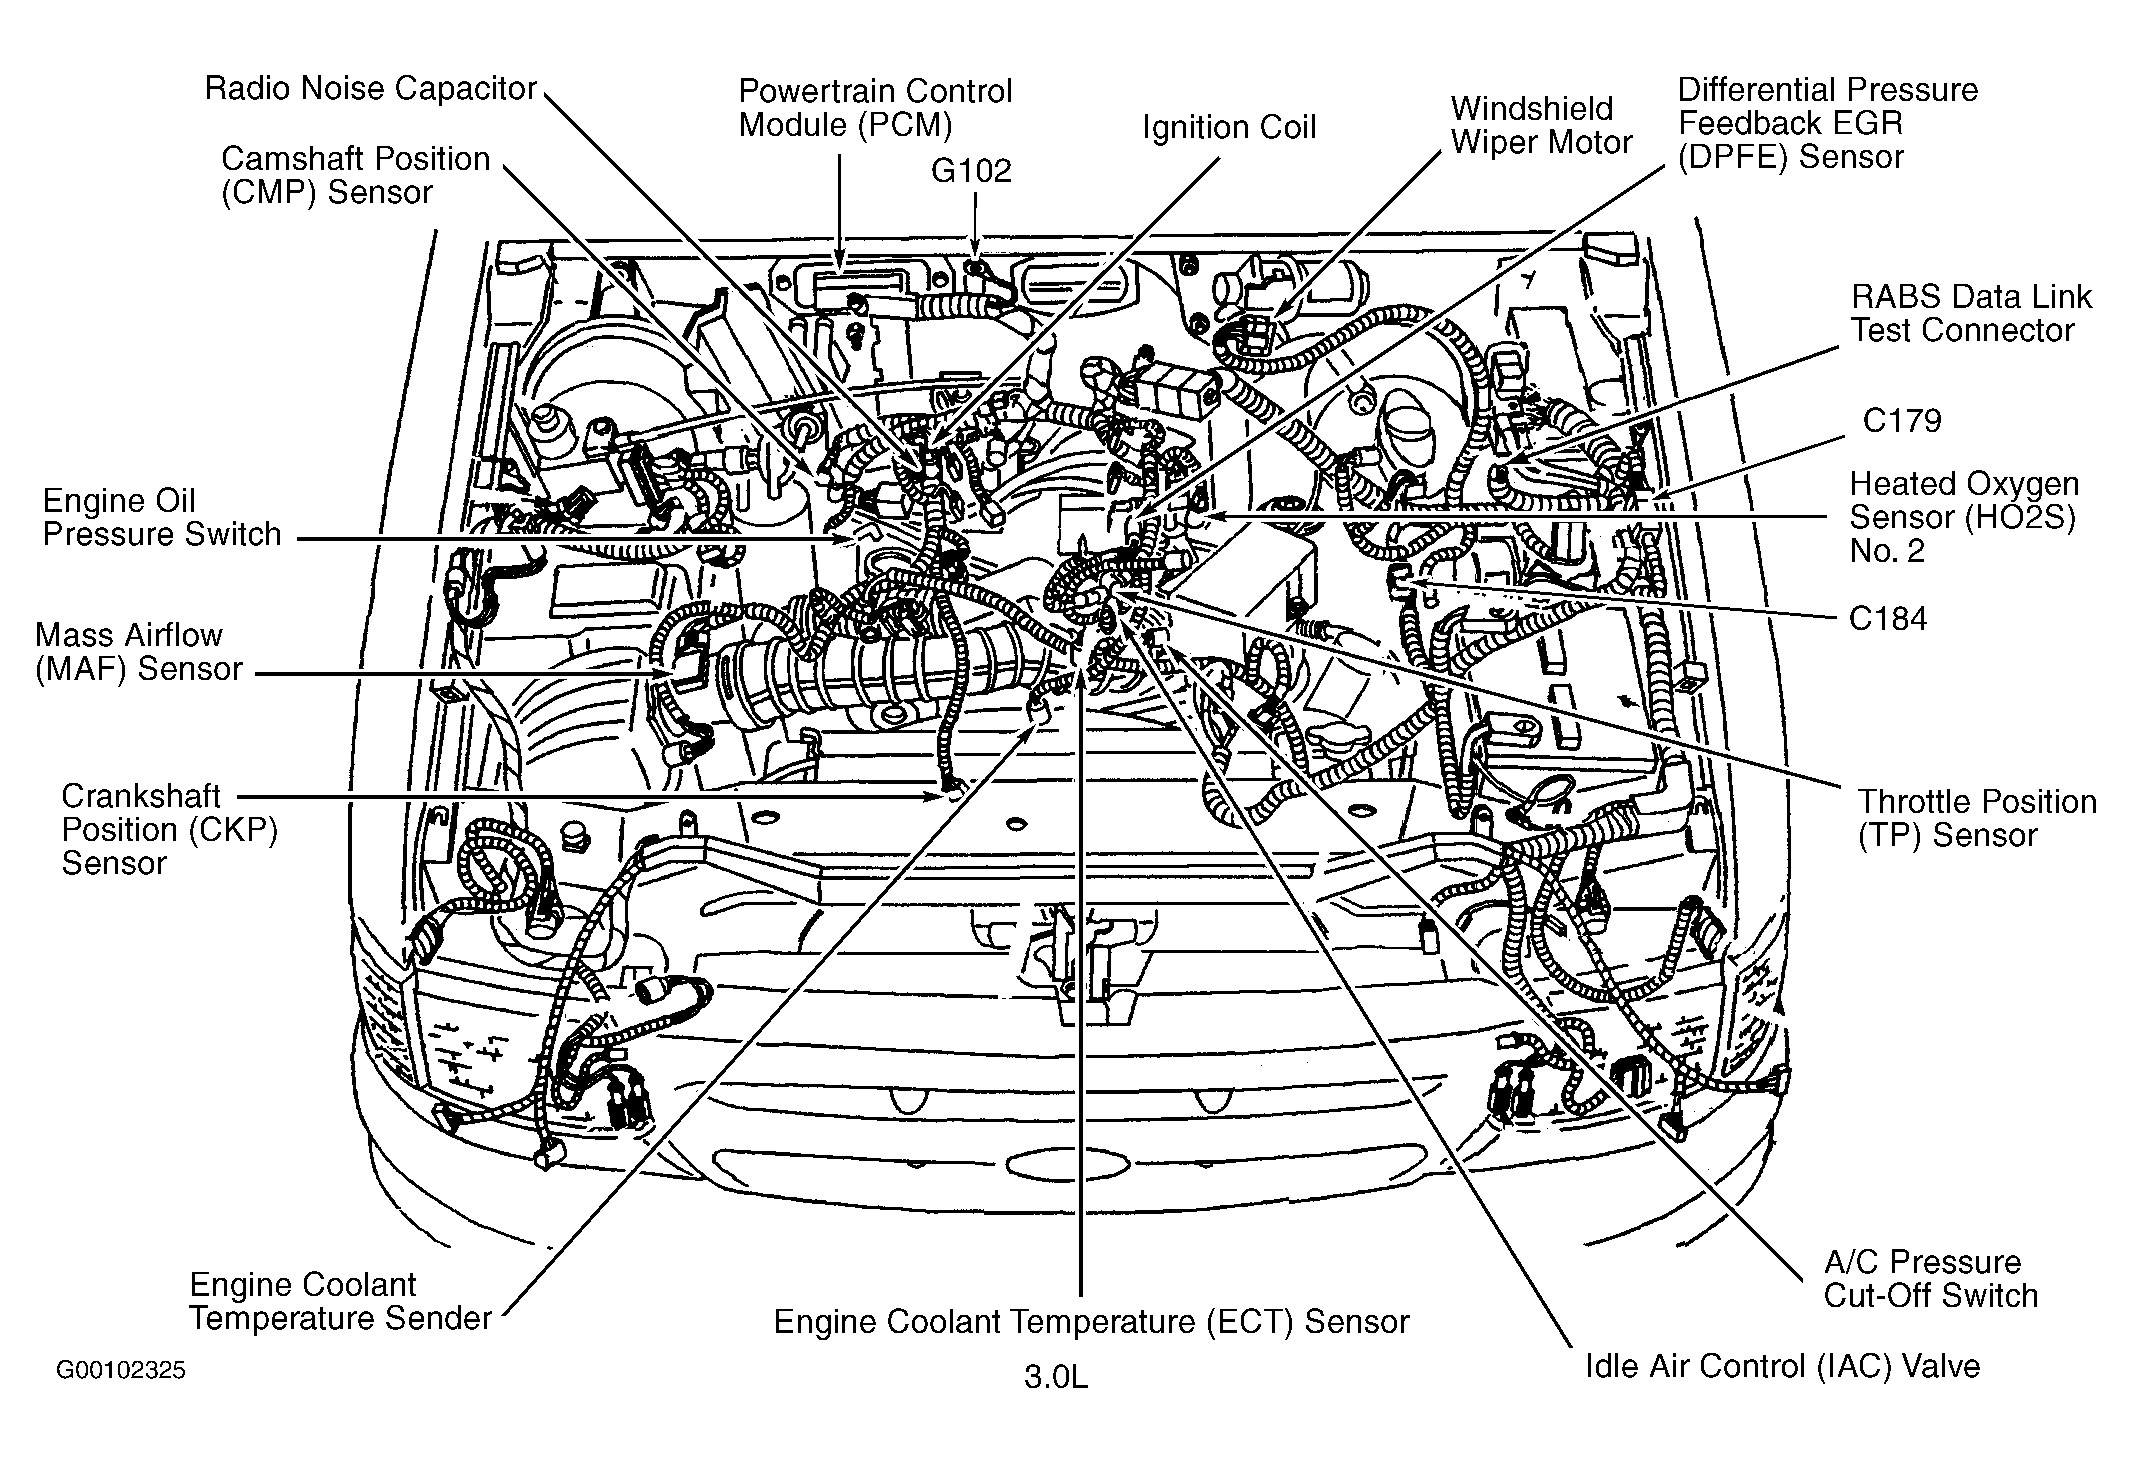 3.0 ford V-6 Engine Wiring Diagram ford Ranger 3 0 Engine Part Diagram Wiring Diagram Of 3.0 ford V-6 Engine Wiring Diagram